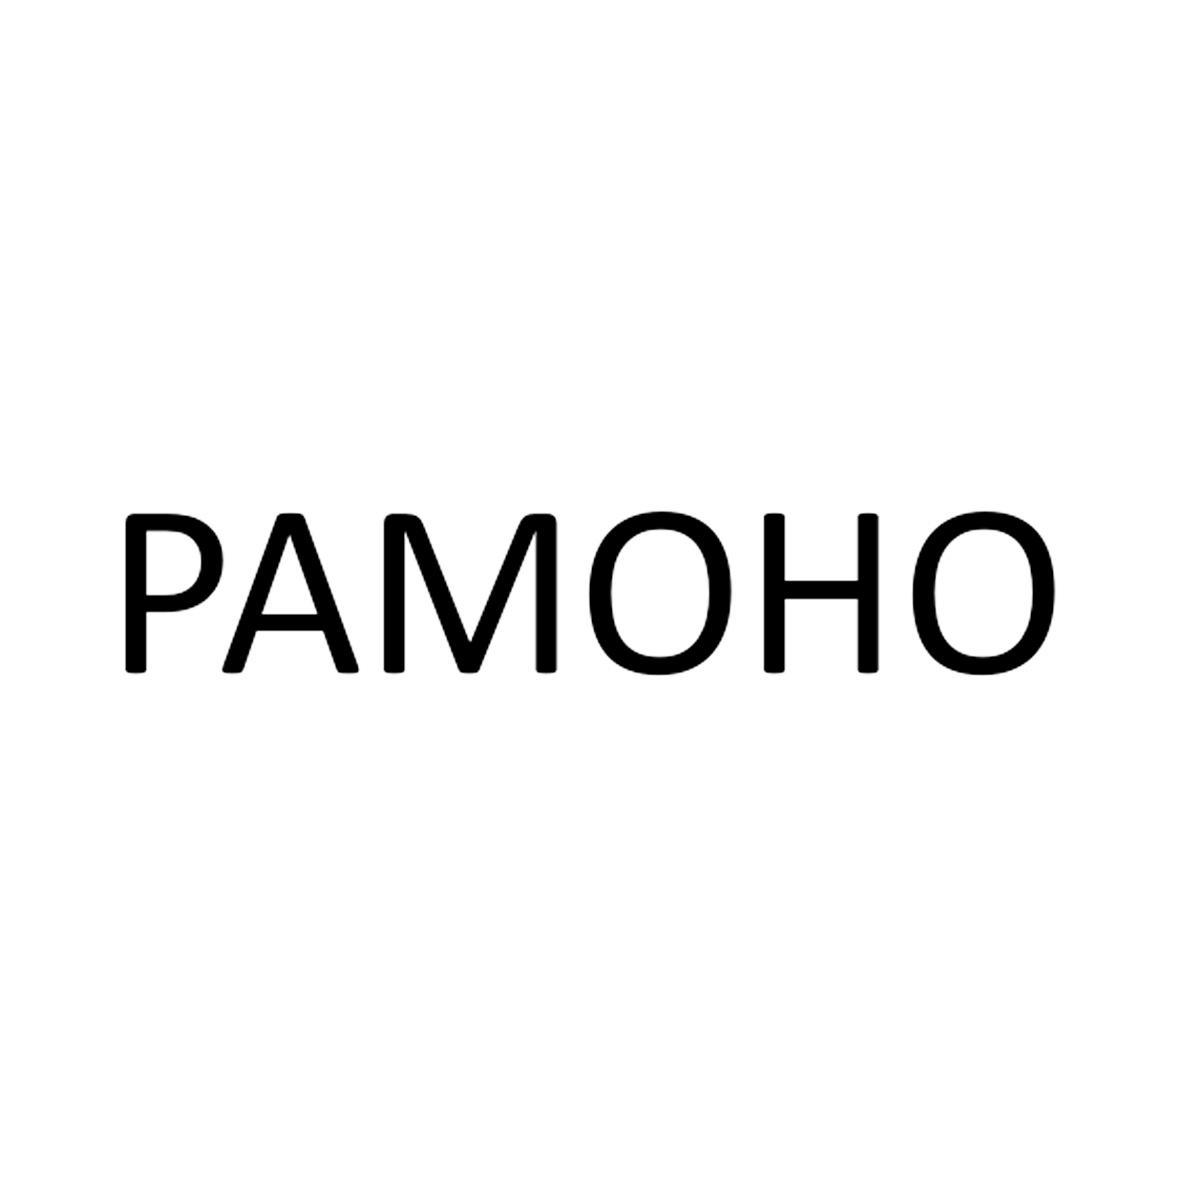 PAMOHO